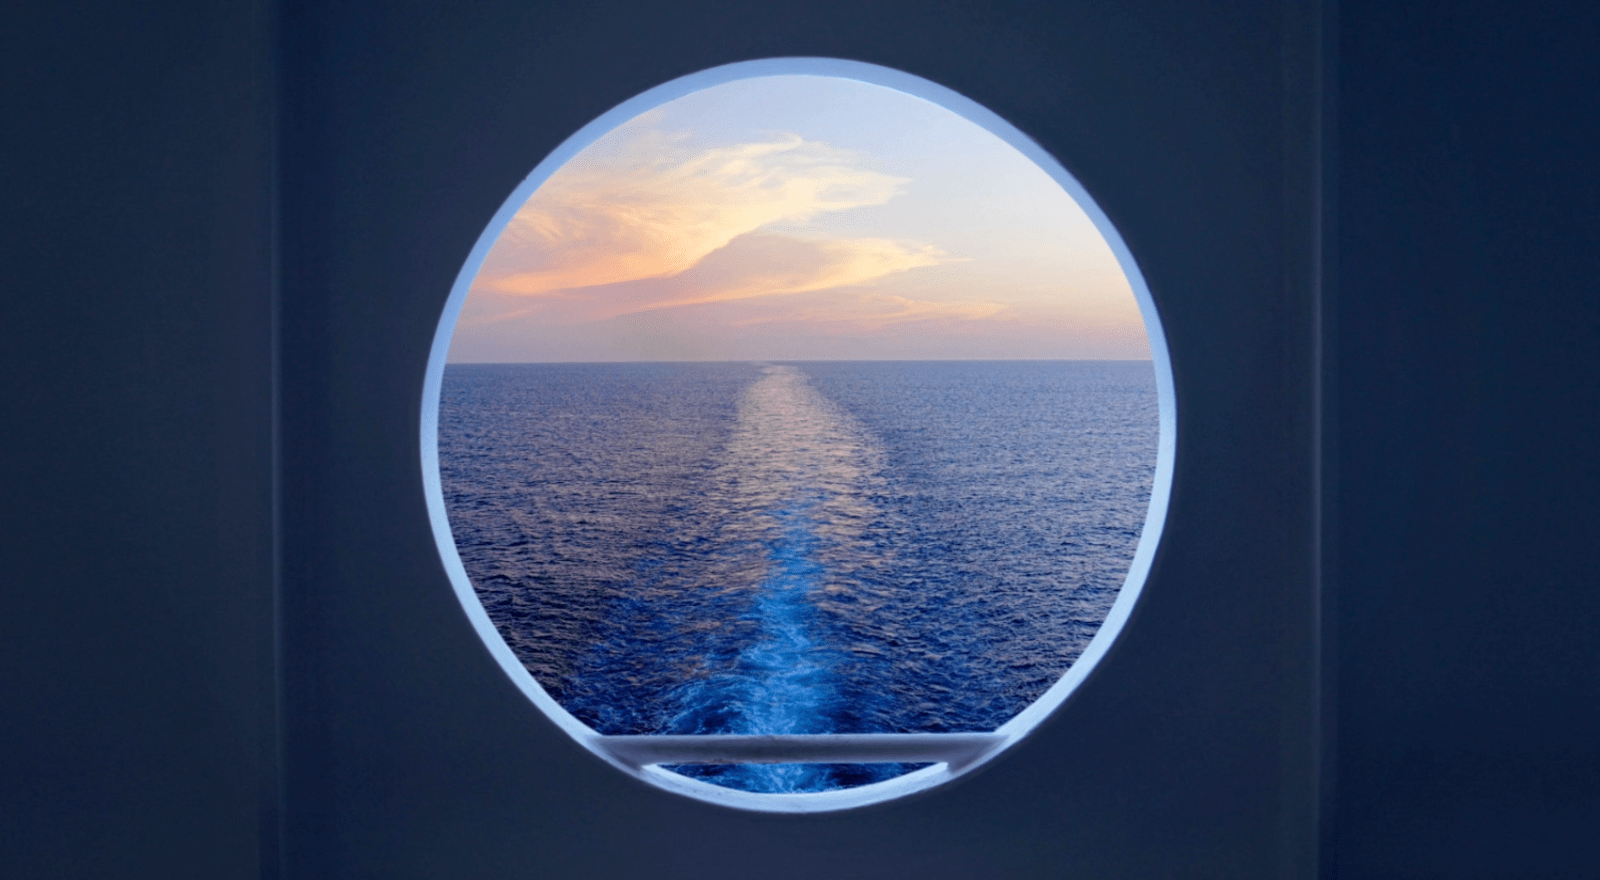 A ship's wake at sunset viewed through a porthole